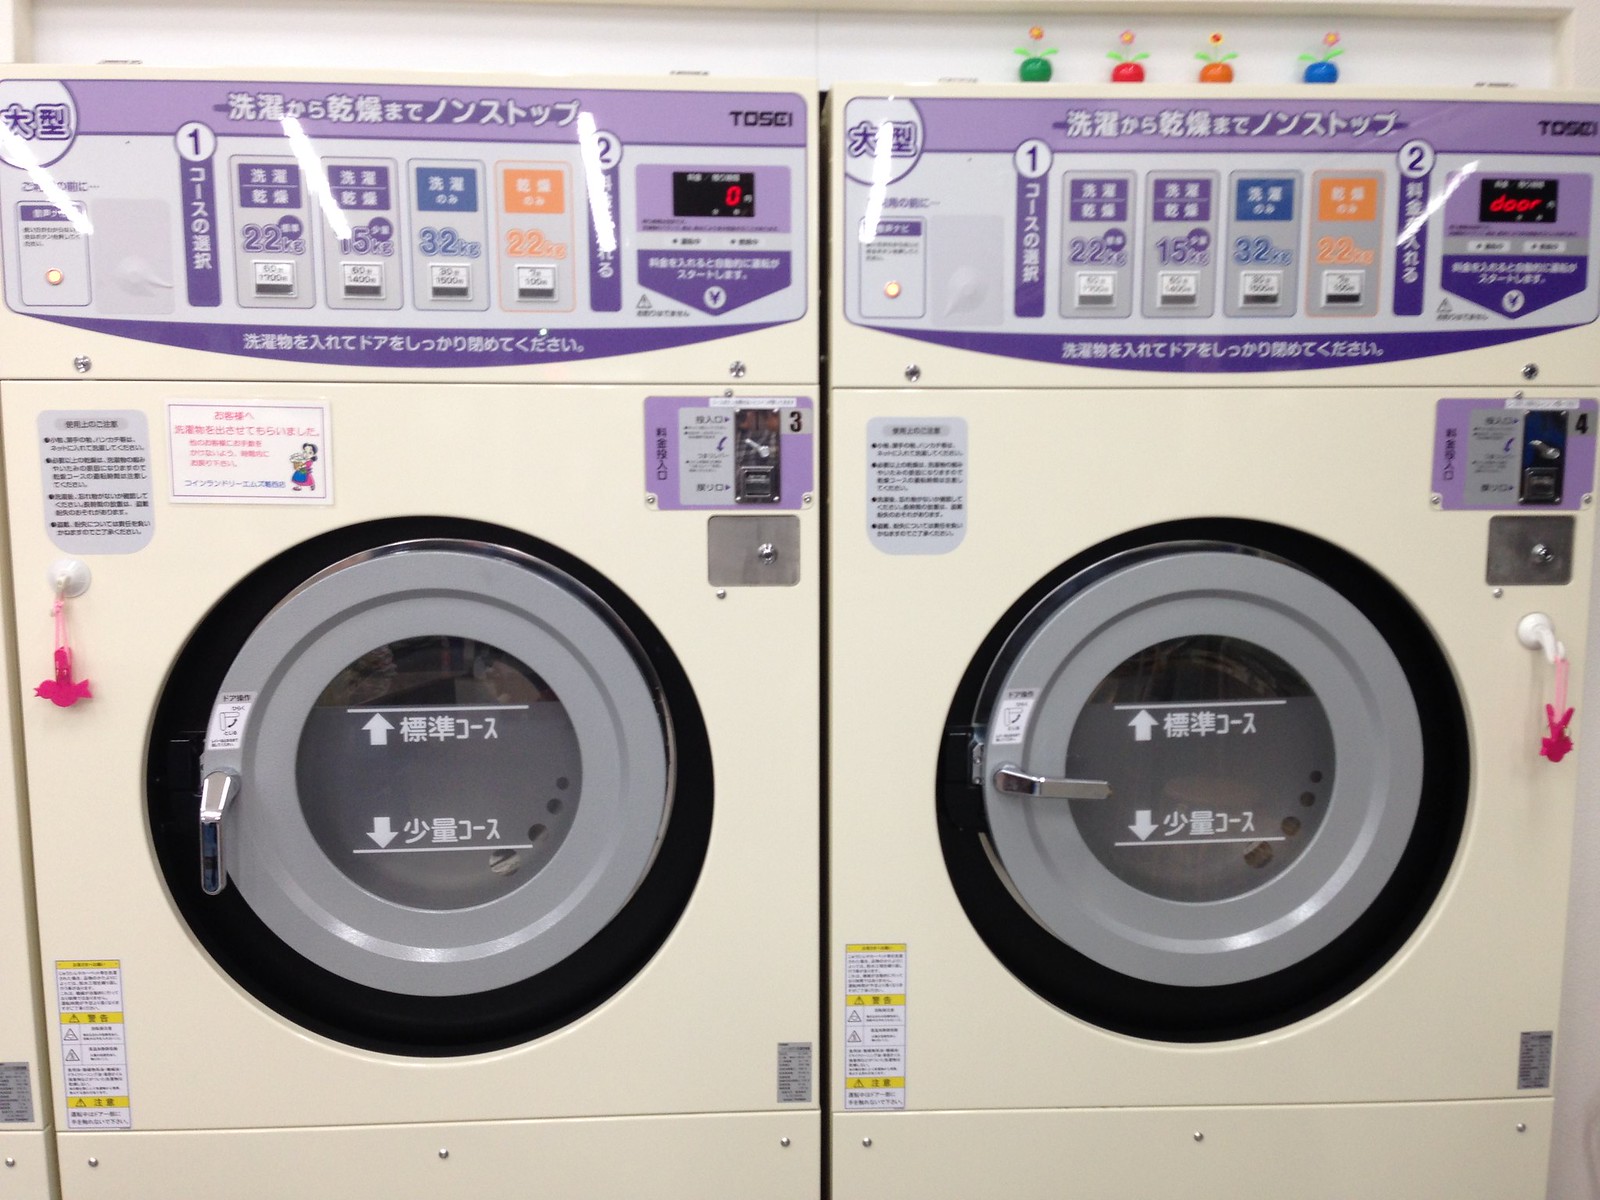 Many types of machines, no separately buying of washing powder